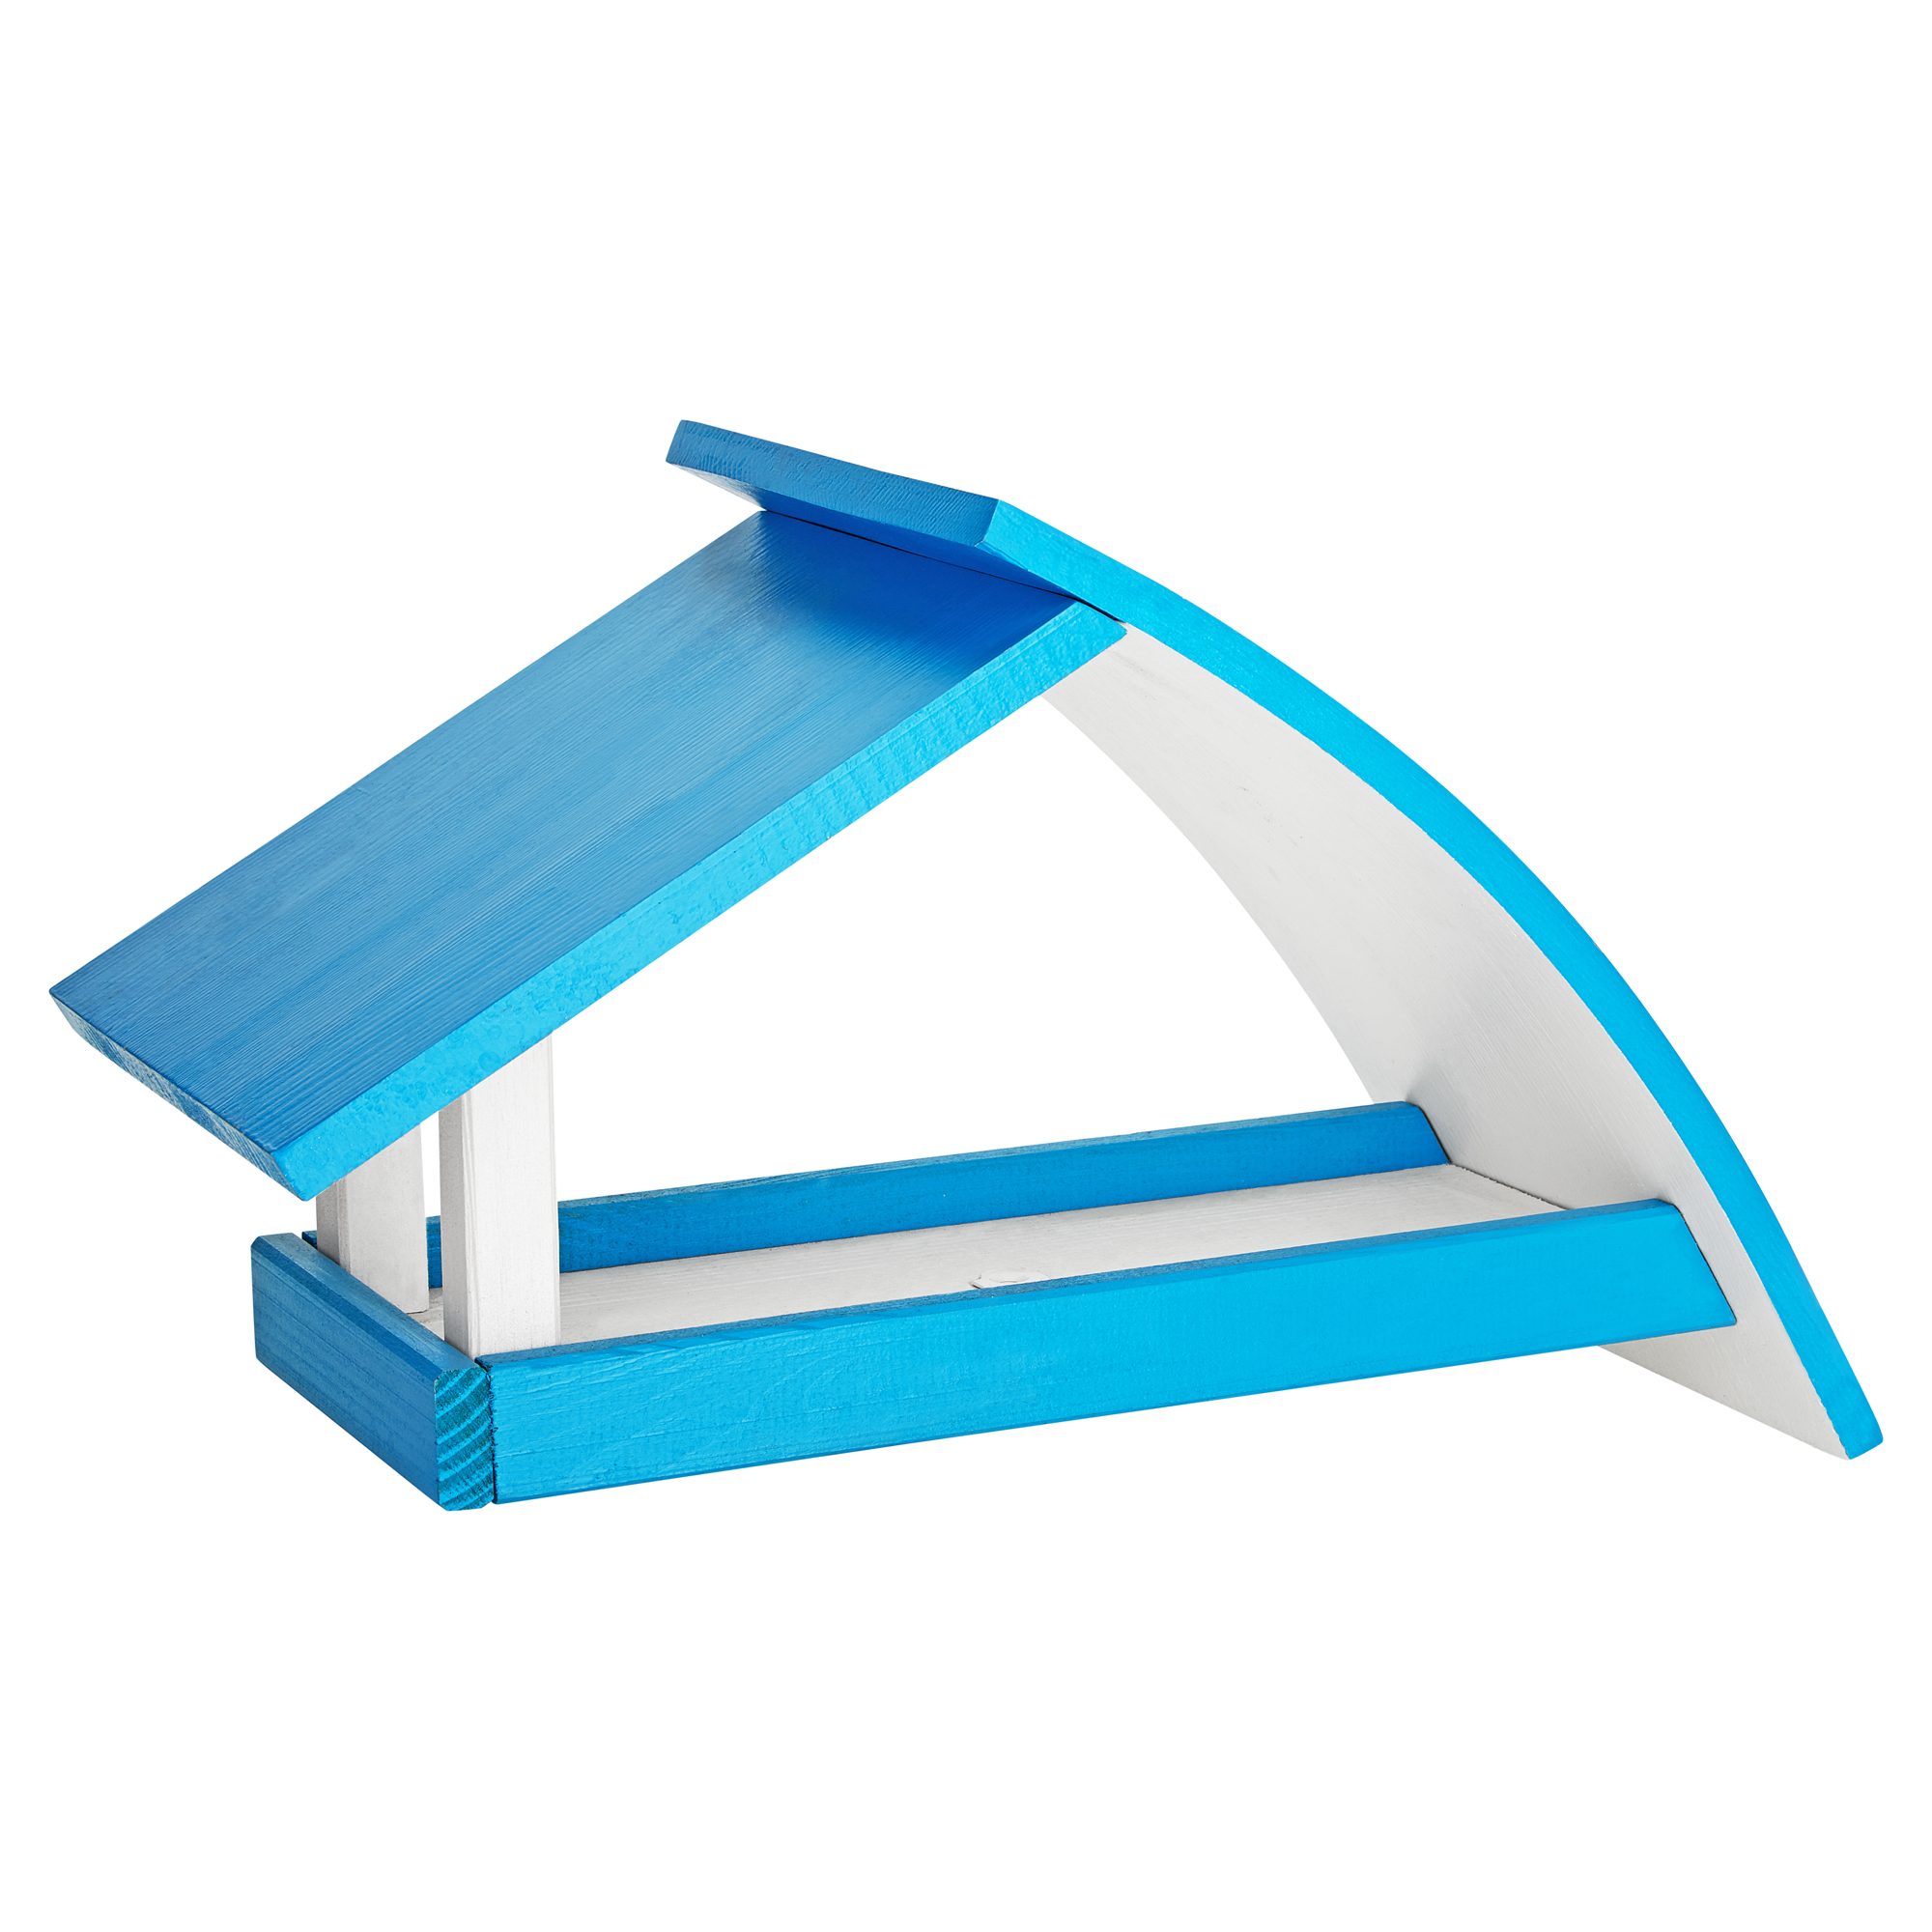 Vogelfutterhaus 'New Wave' 39 x 23 cm blau/weiß + product picture